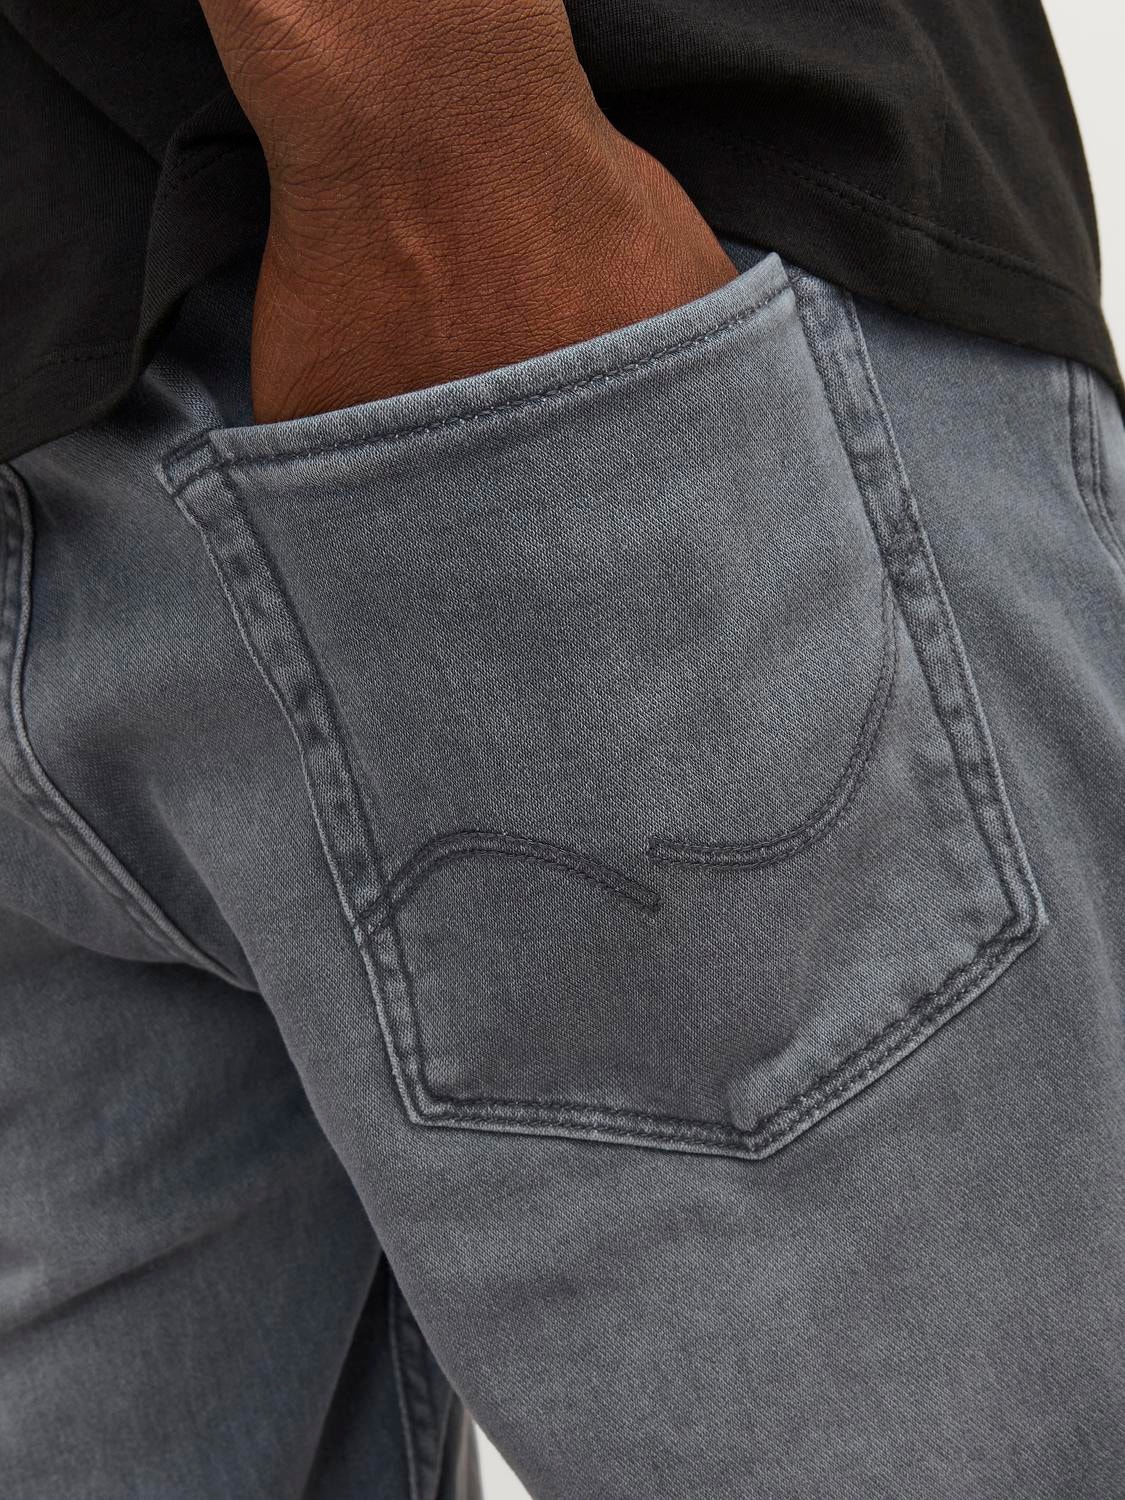 Jack & Jones Regular Fit Jeans Shorts -Grey Denim - 12249214